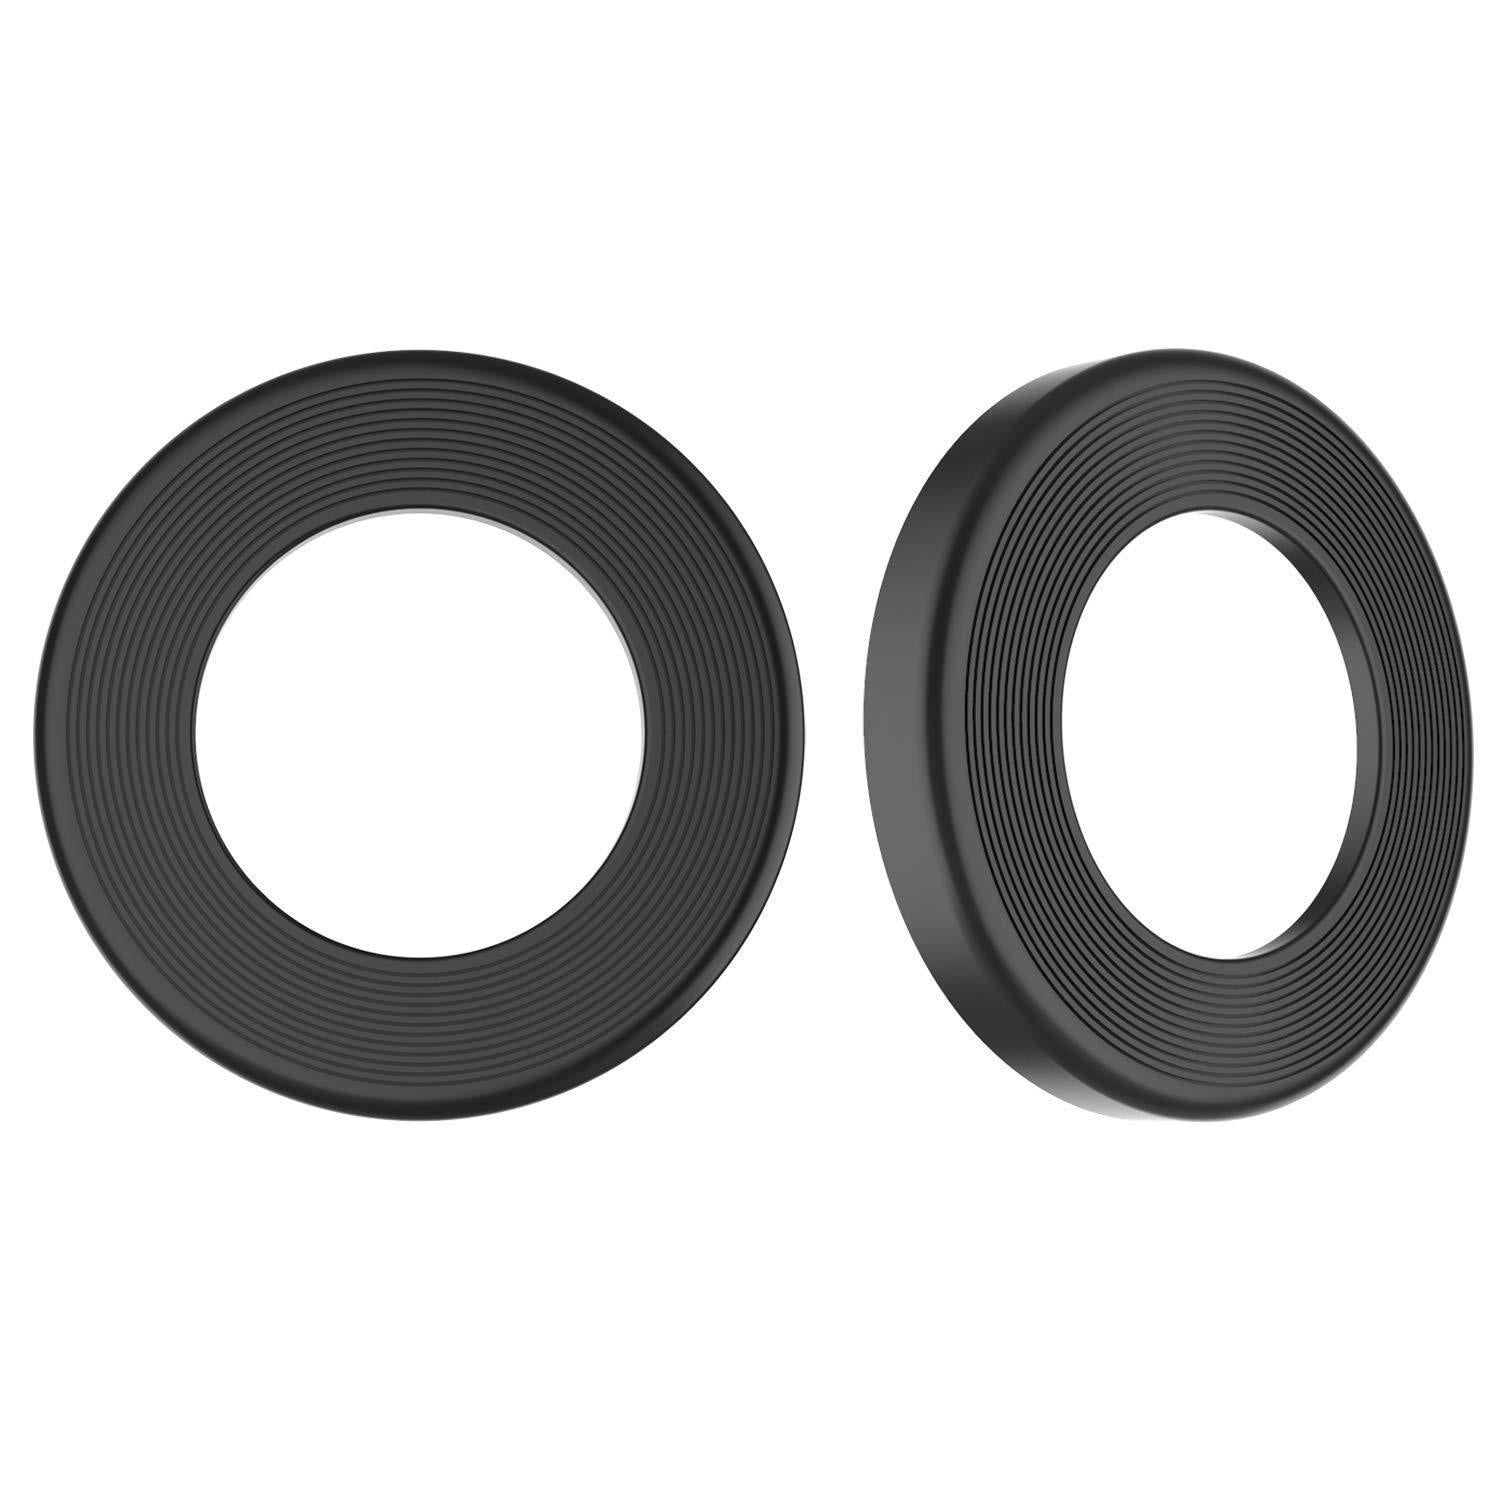 Punkcase iPhone 11 Pro Camera Protector Ring [Black]